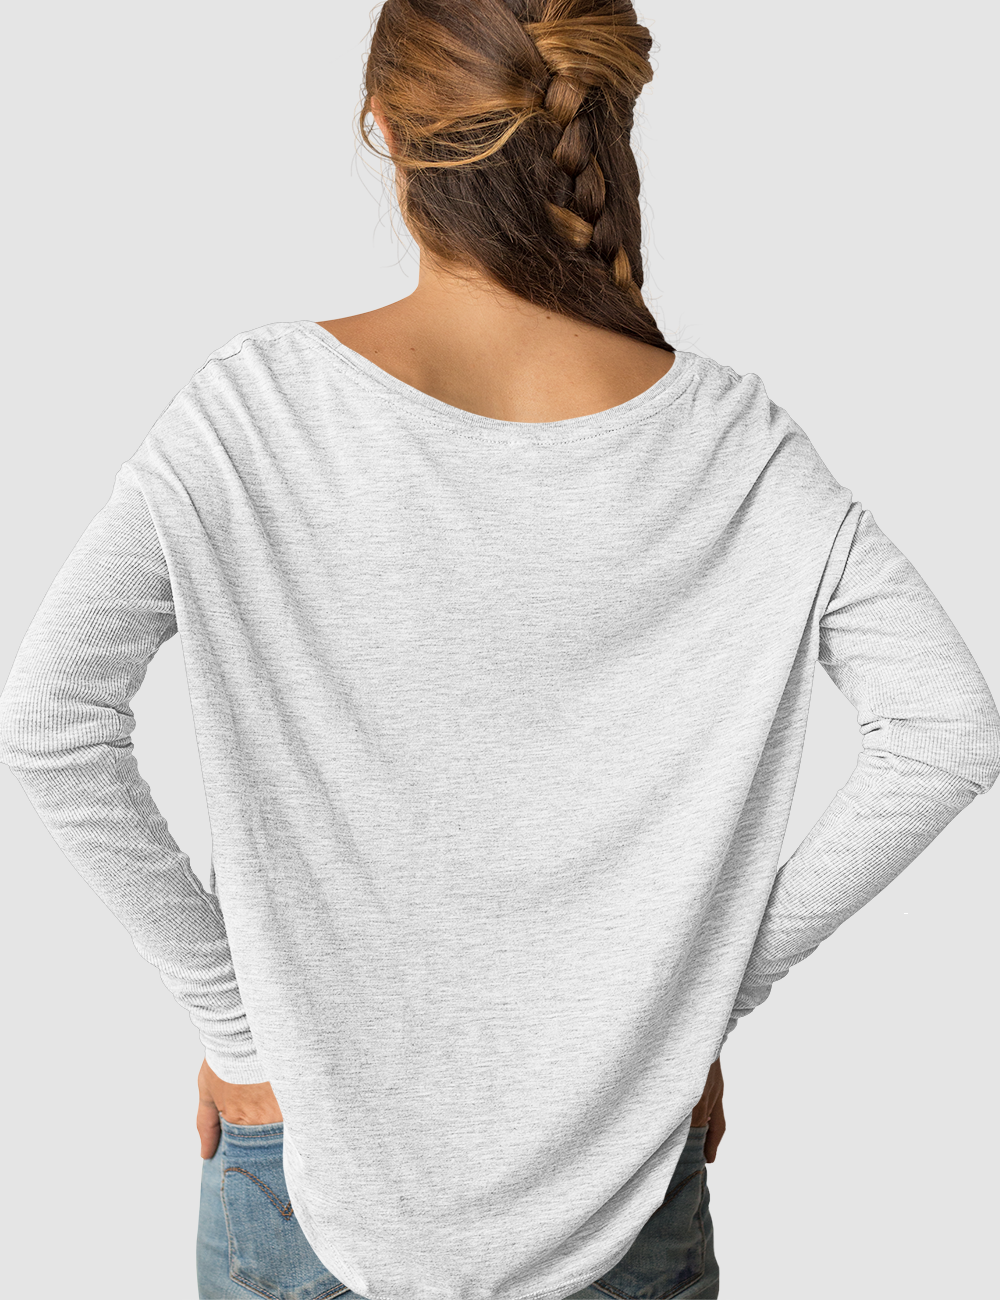 This Is What A Feminist Looks Like | Women's Flowy Long Sleeve Shirt OniTakai